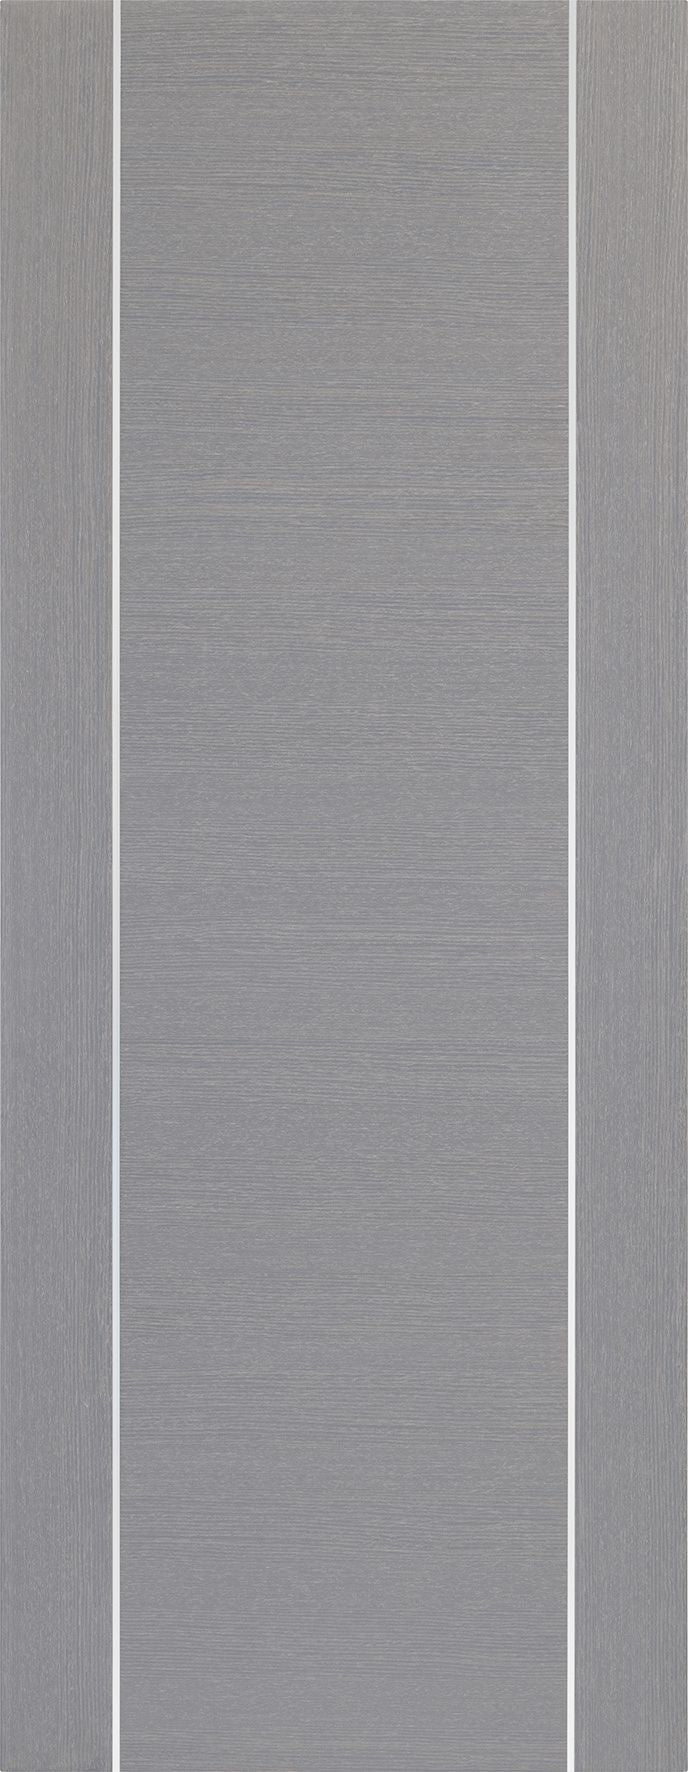 Forli Light Grey Prefinished Internal Door